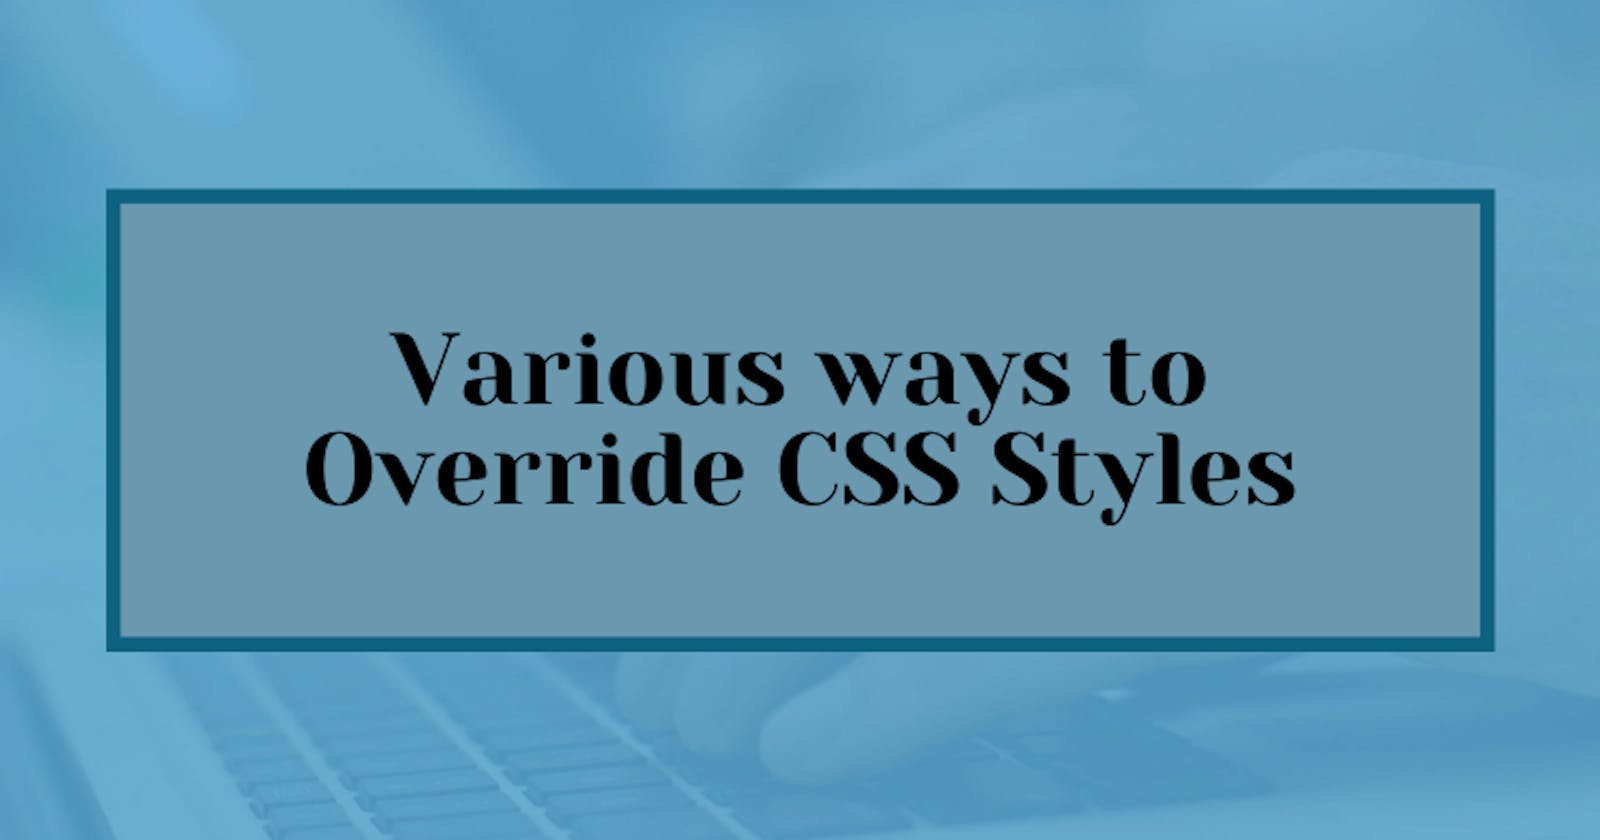 Ways to override CSS styles